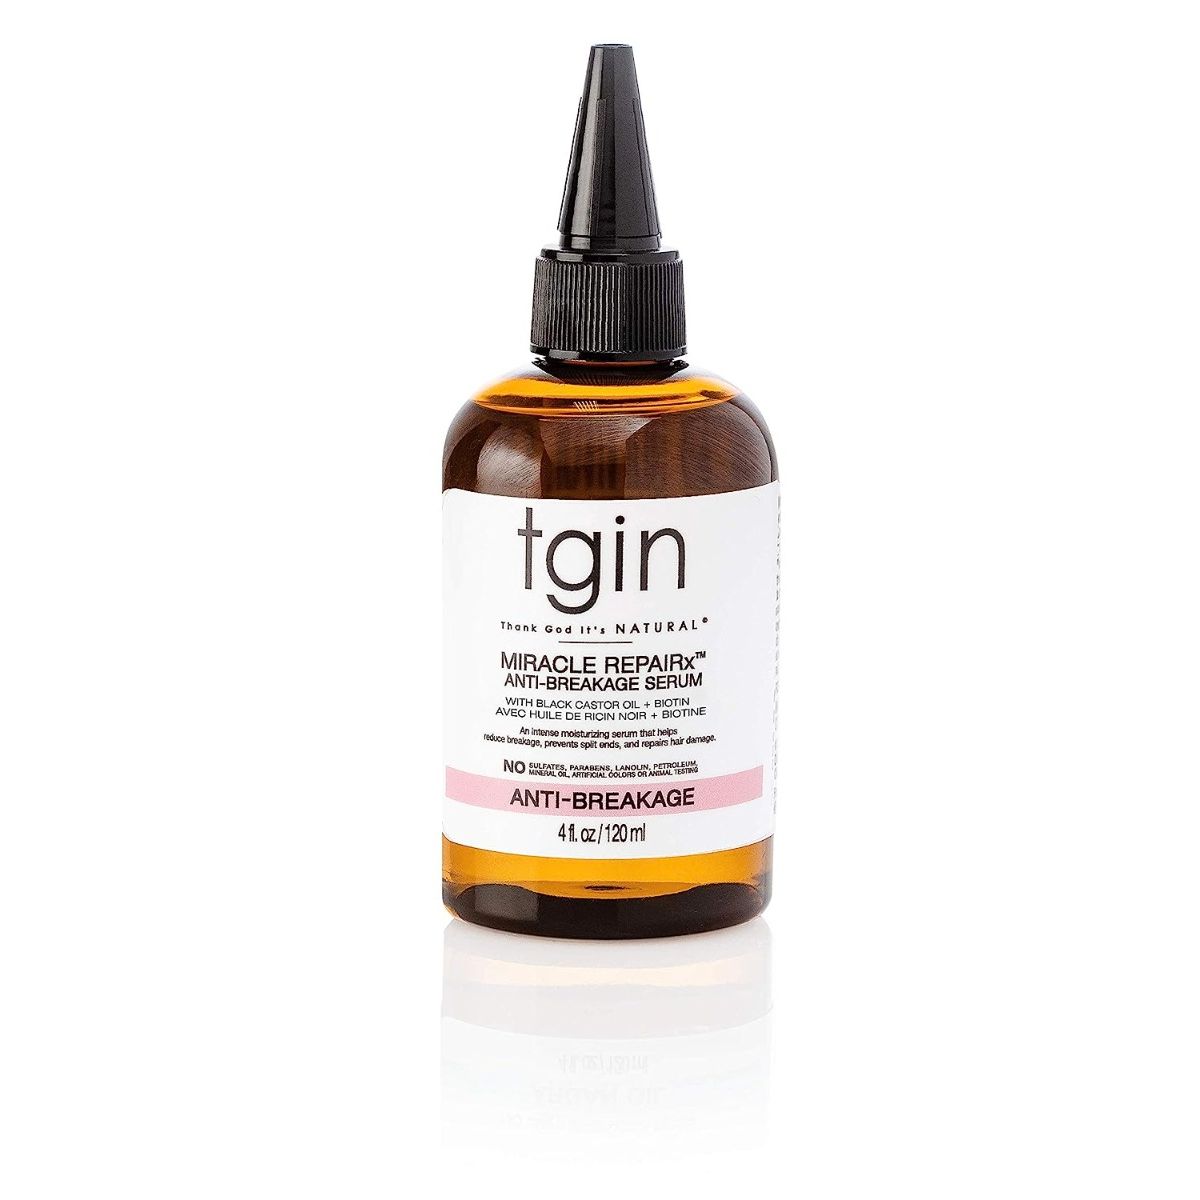 TGIN Argan Replenishing Hair & Body Serum 120 ml - Africa Products Shop